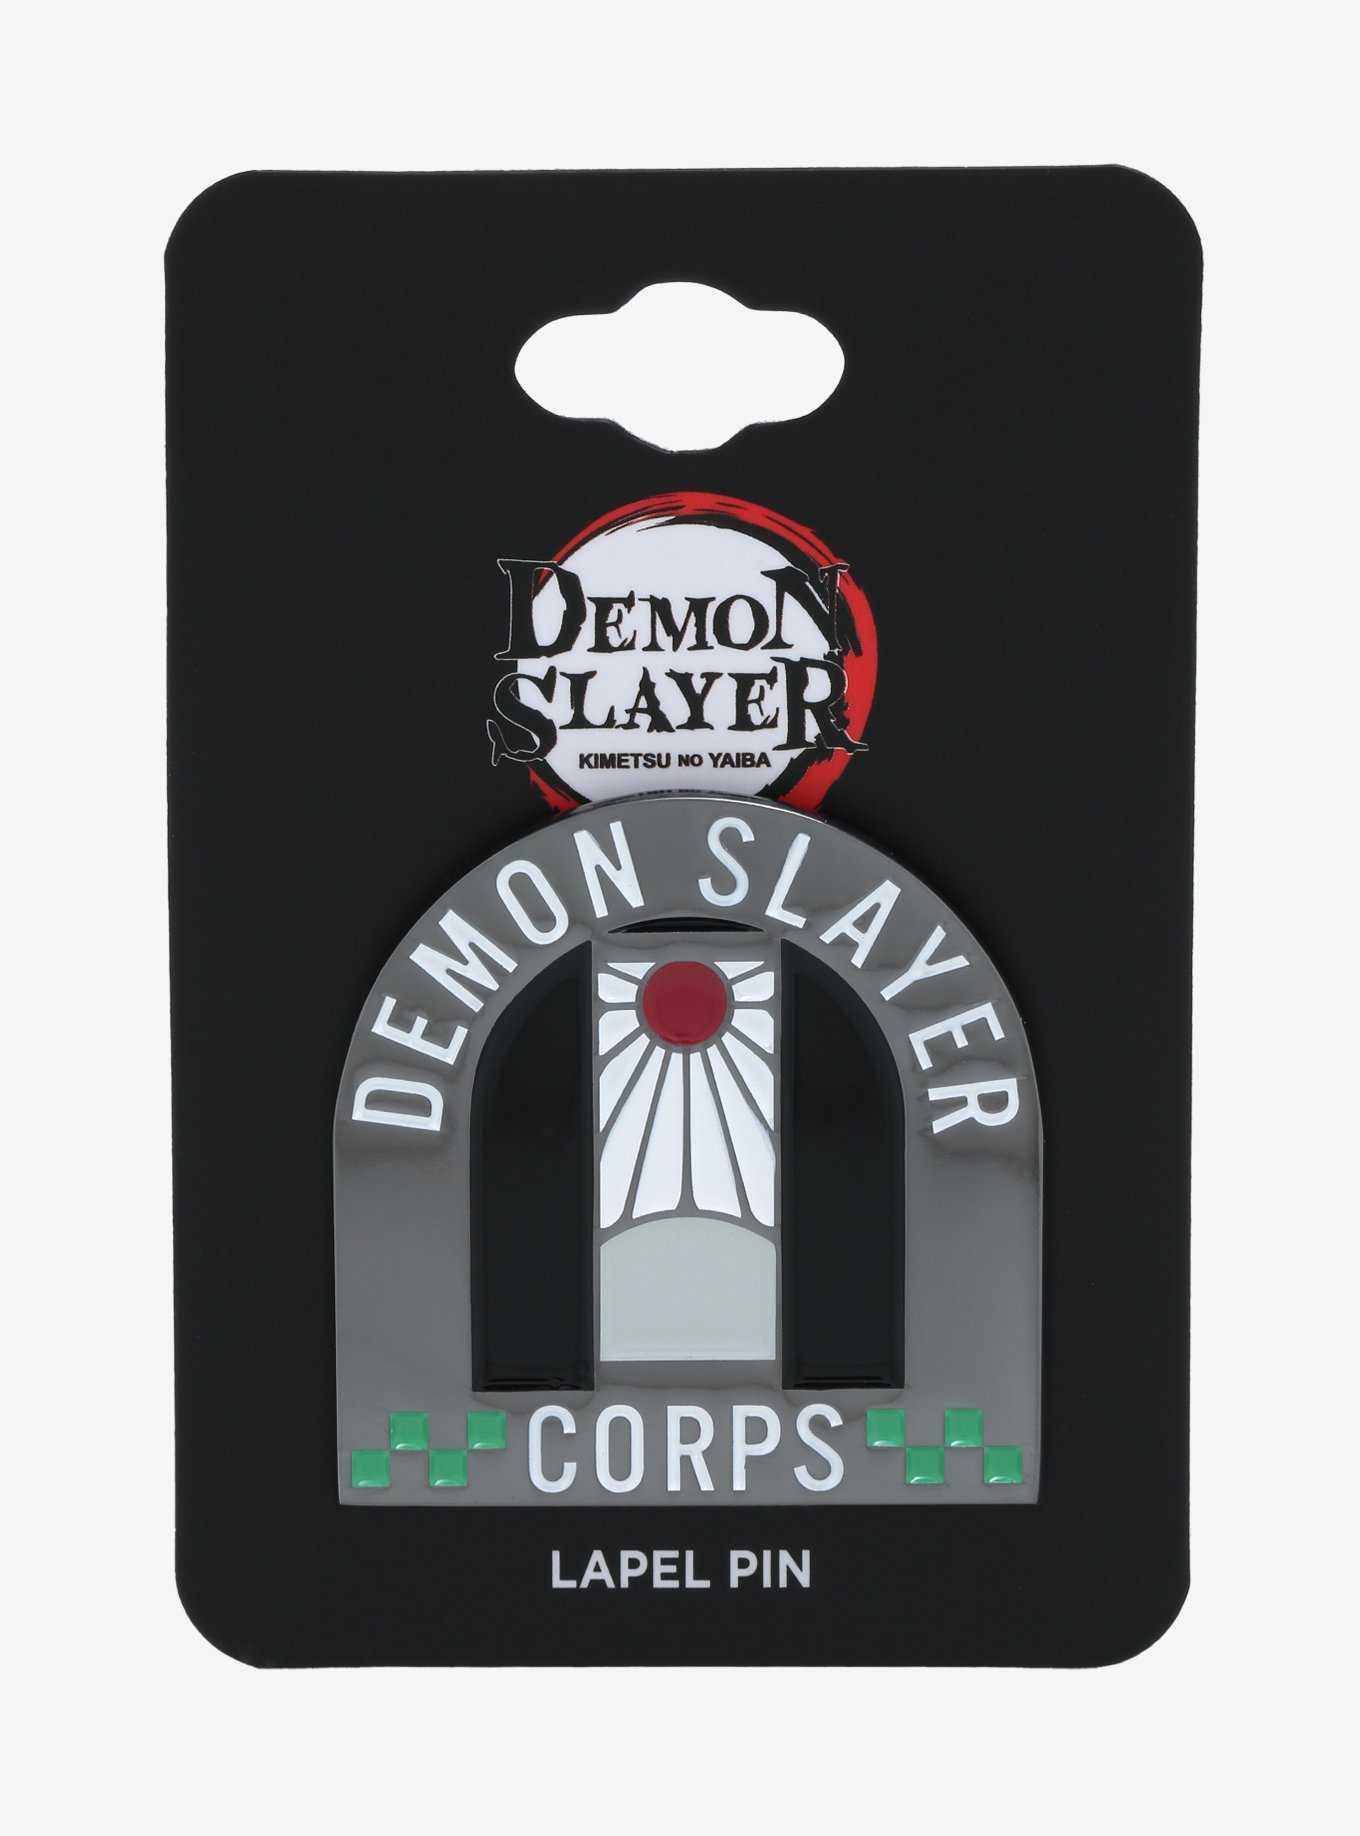 Demon Slayer: Kimetsu no Yaiba Demon Slayer Corps Enamel Pin - BoxLunch Exclusive!, , hi-res